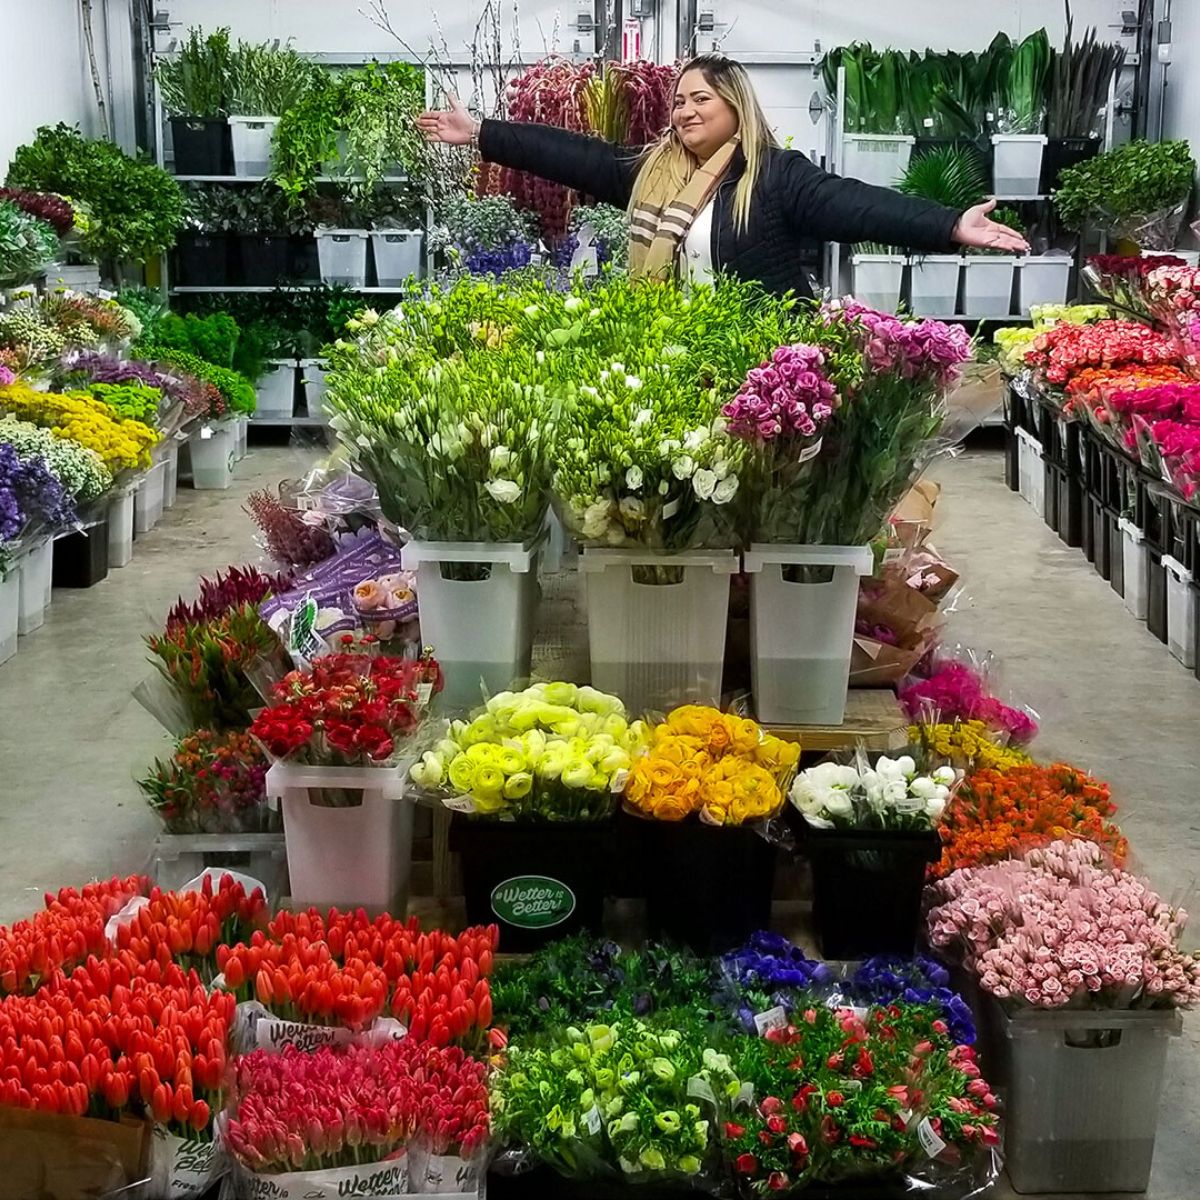 jet-fresh-flowers-trader-on-thursd-featured